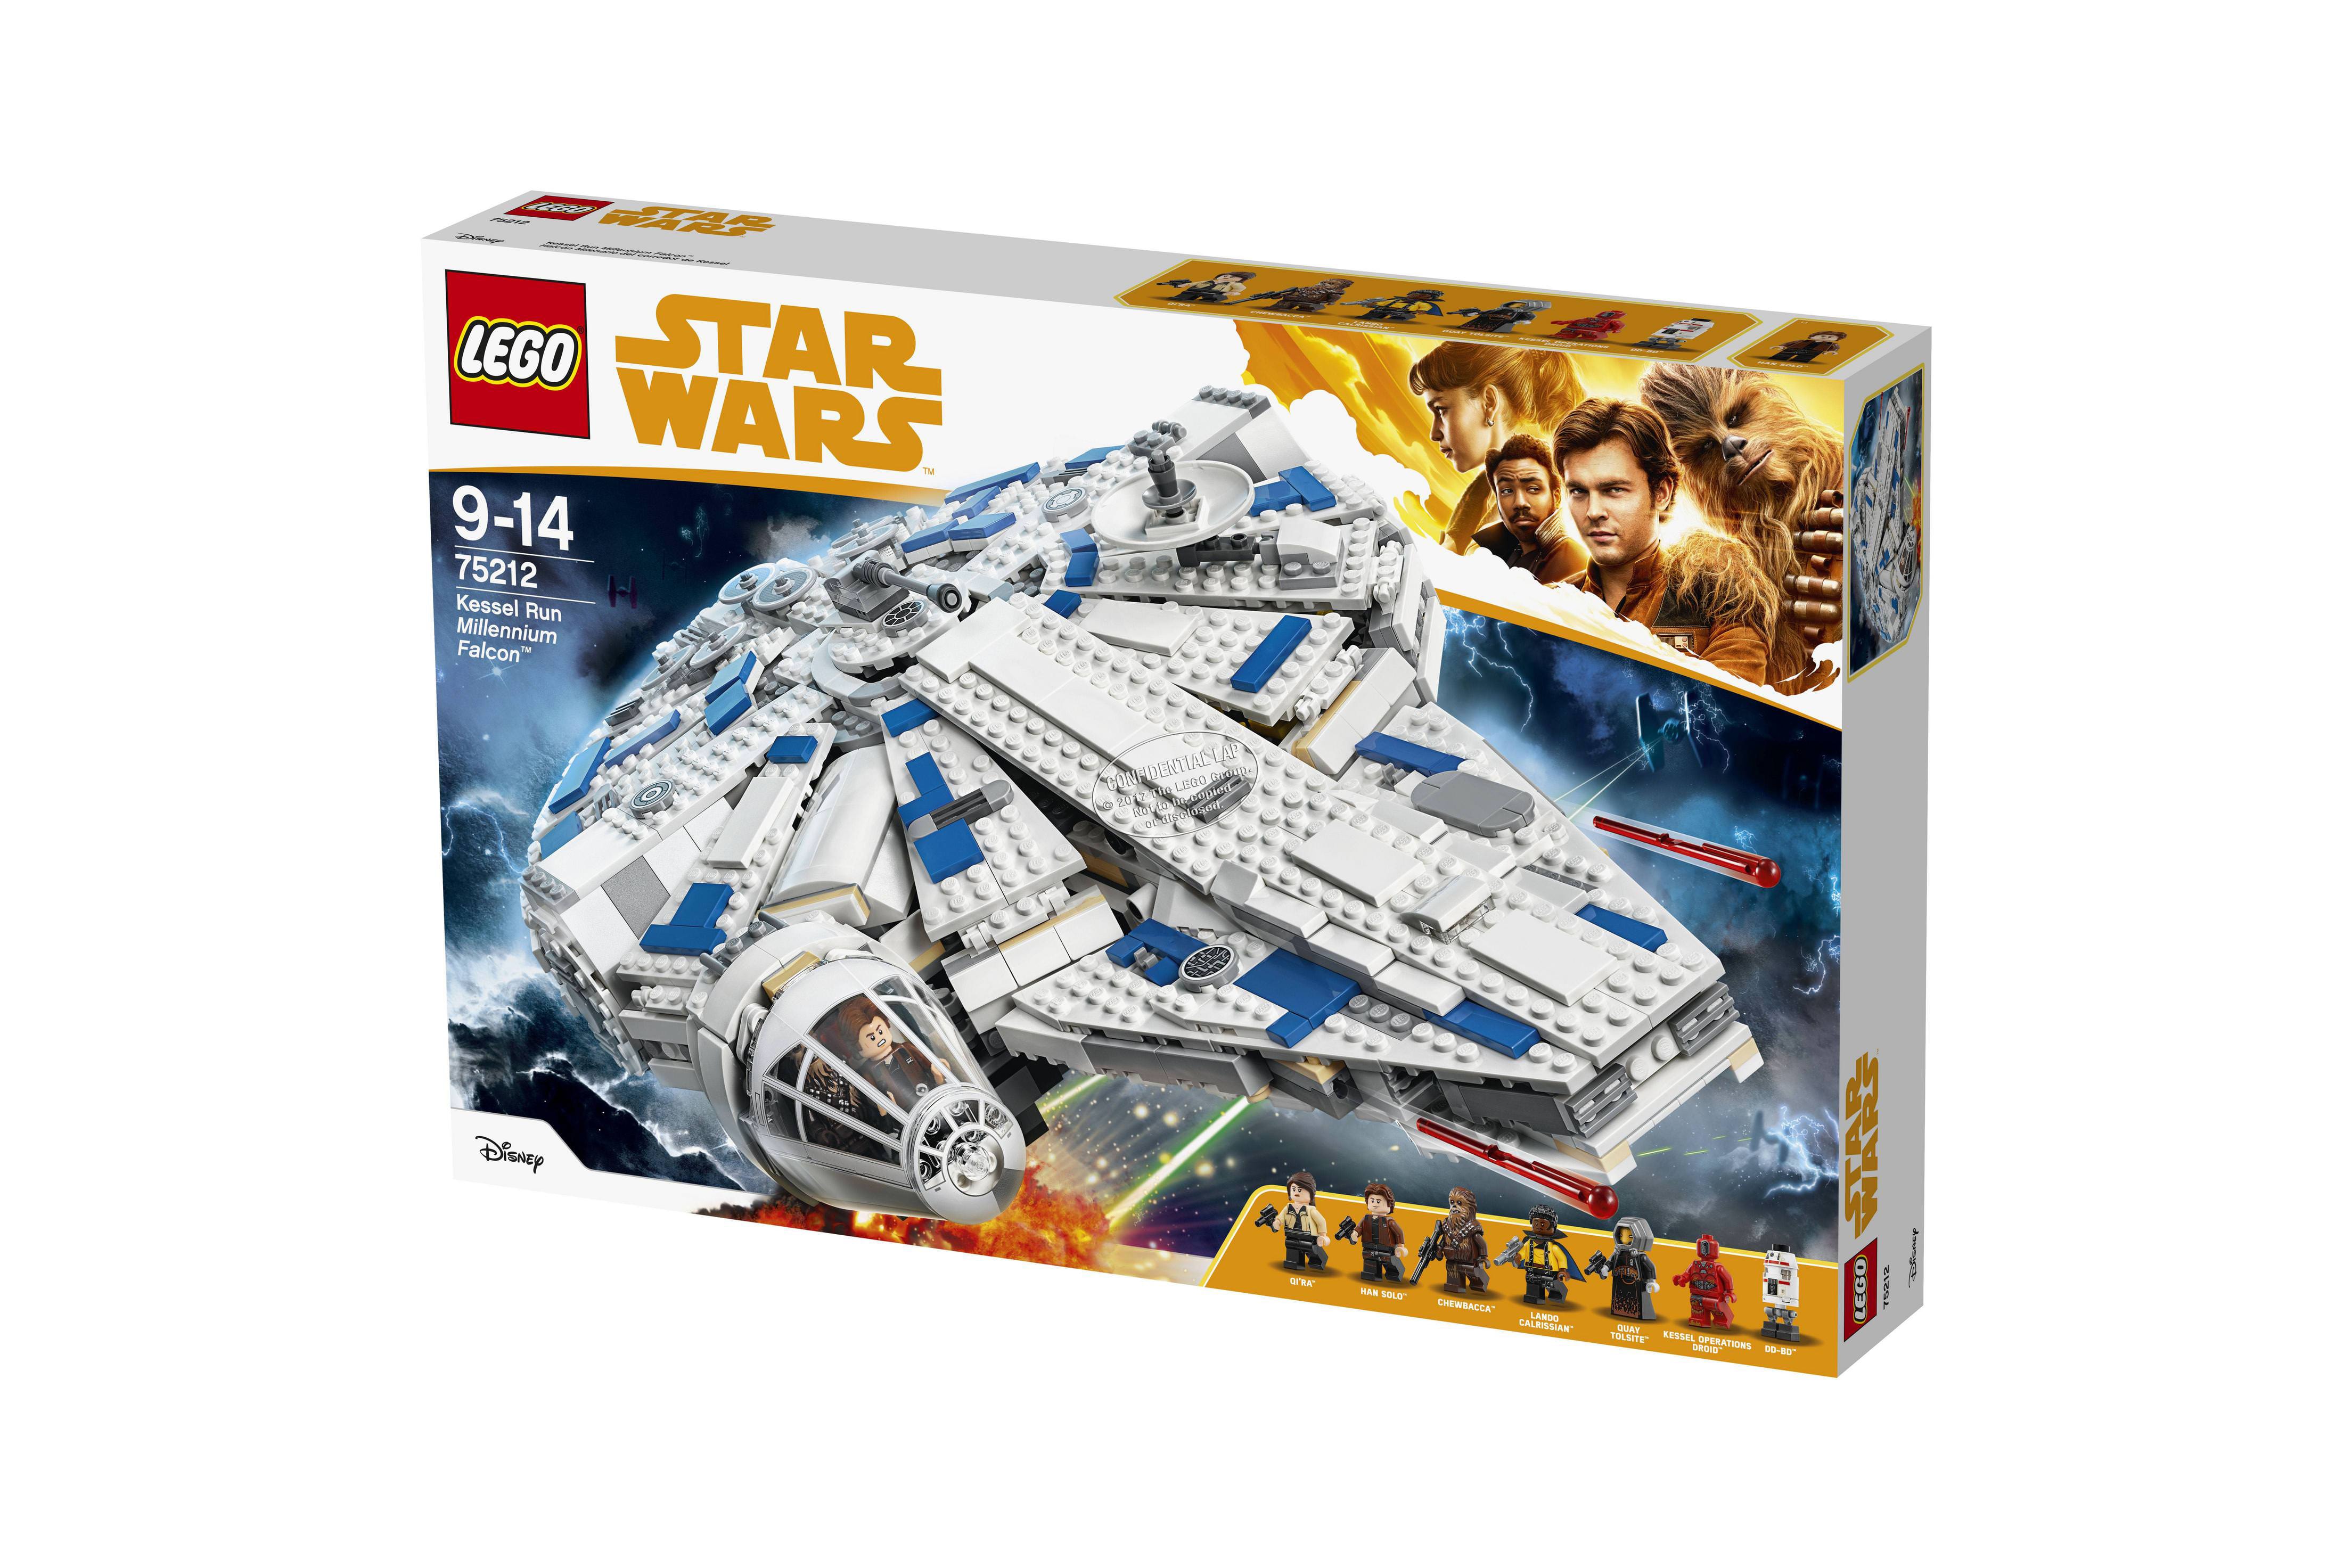 LEGO 即將推出《Solo: A Star Wars Story》電影的千歲鷹玩具模型